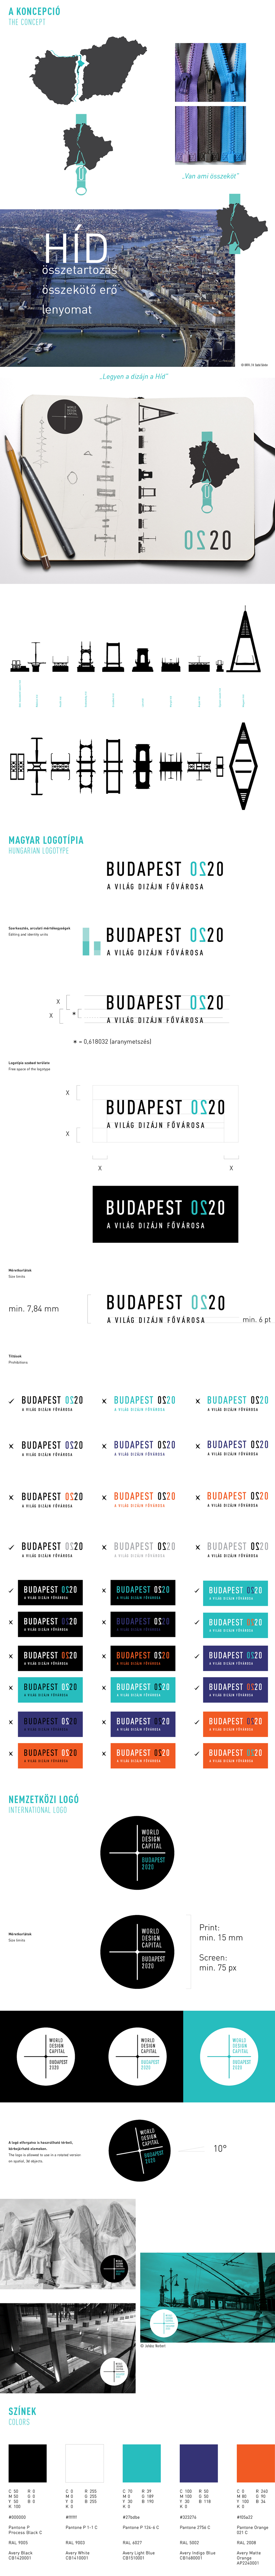 design identity budapest